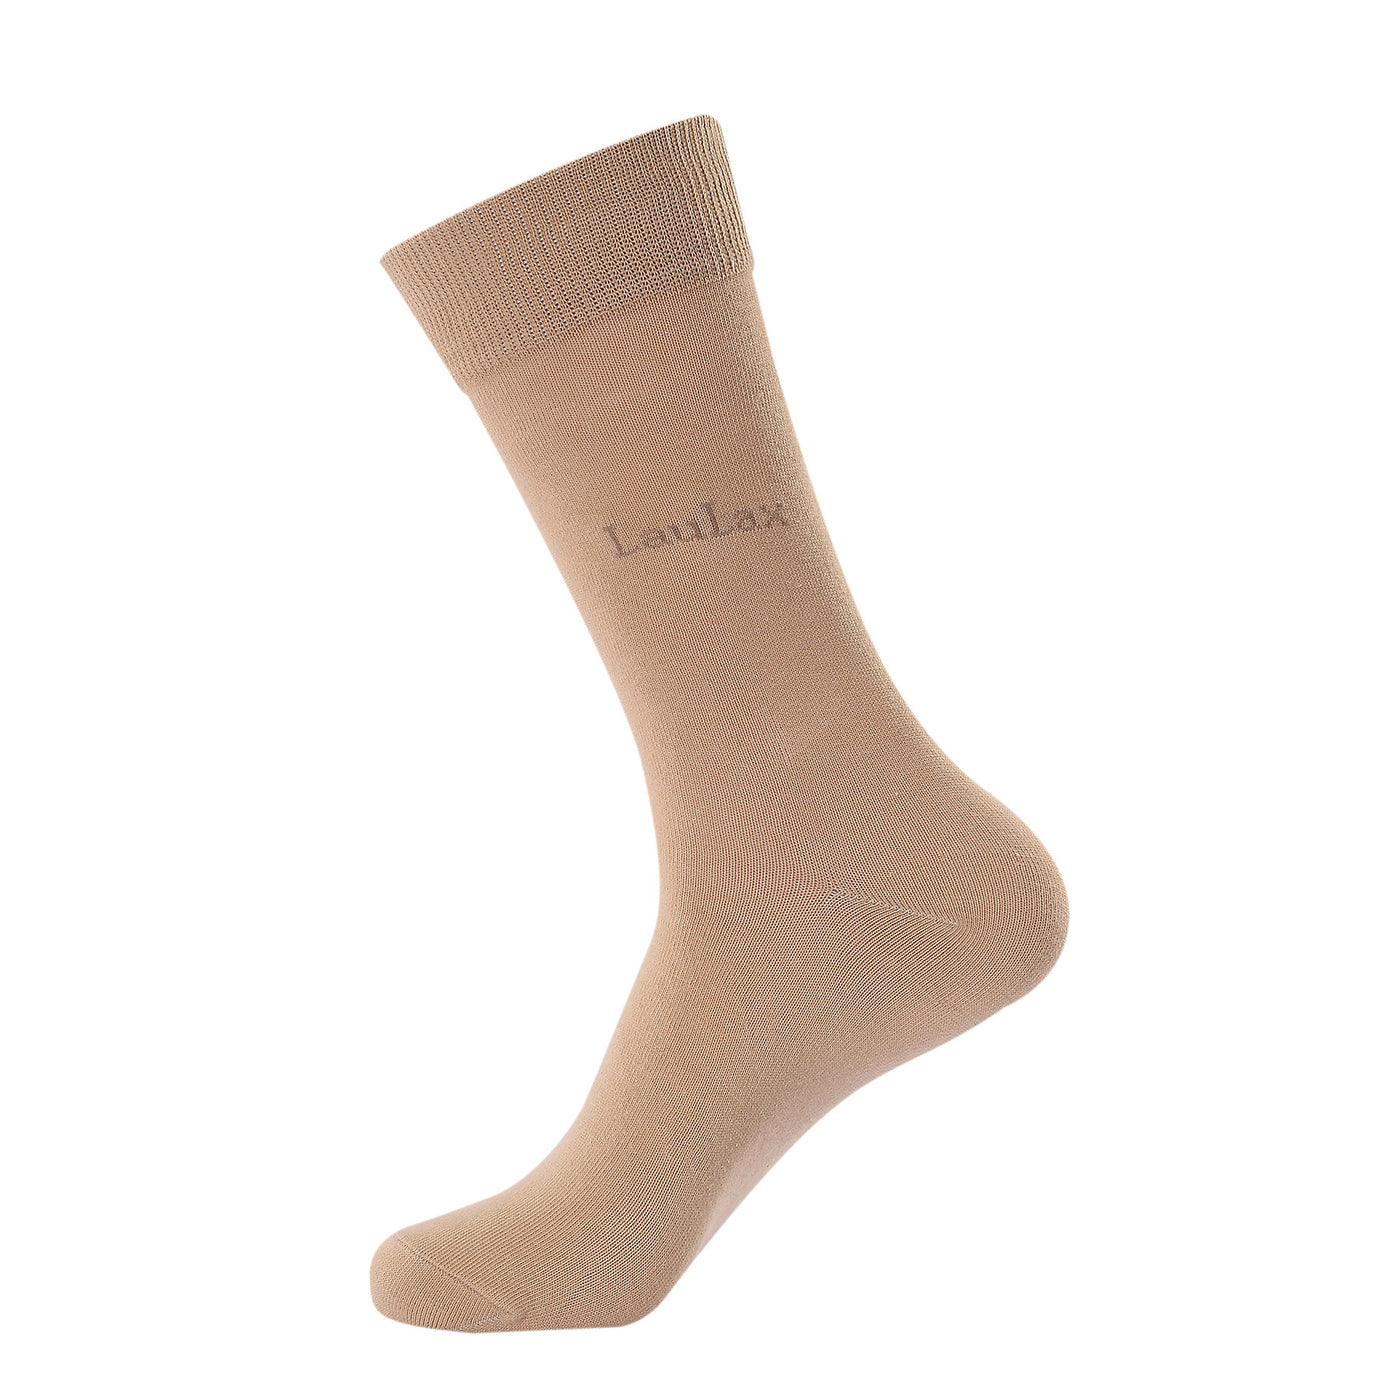 Laulax 4 Pairs Finest men’s Combed Cotton Suit Socks in Beige